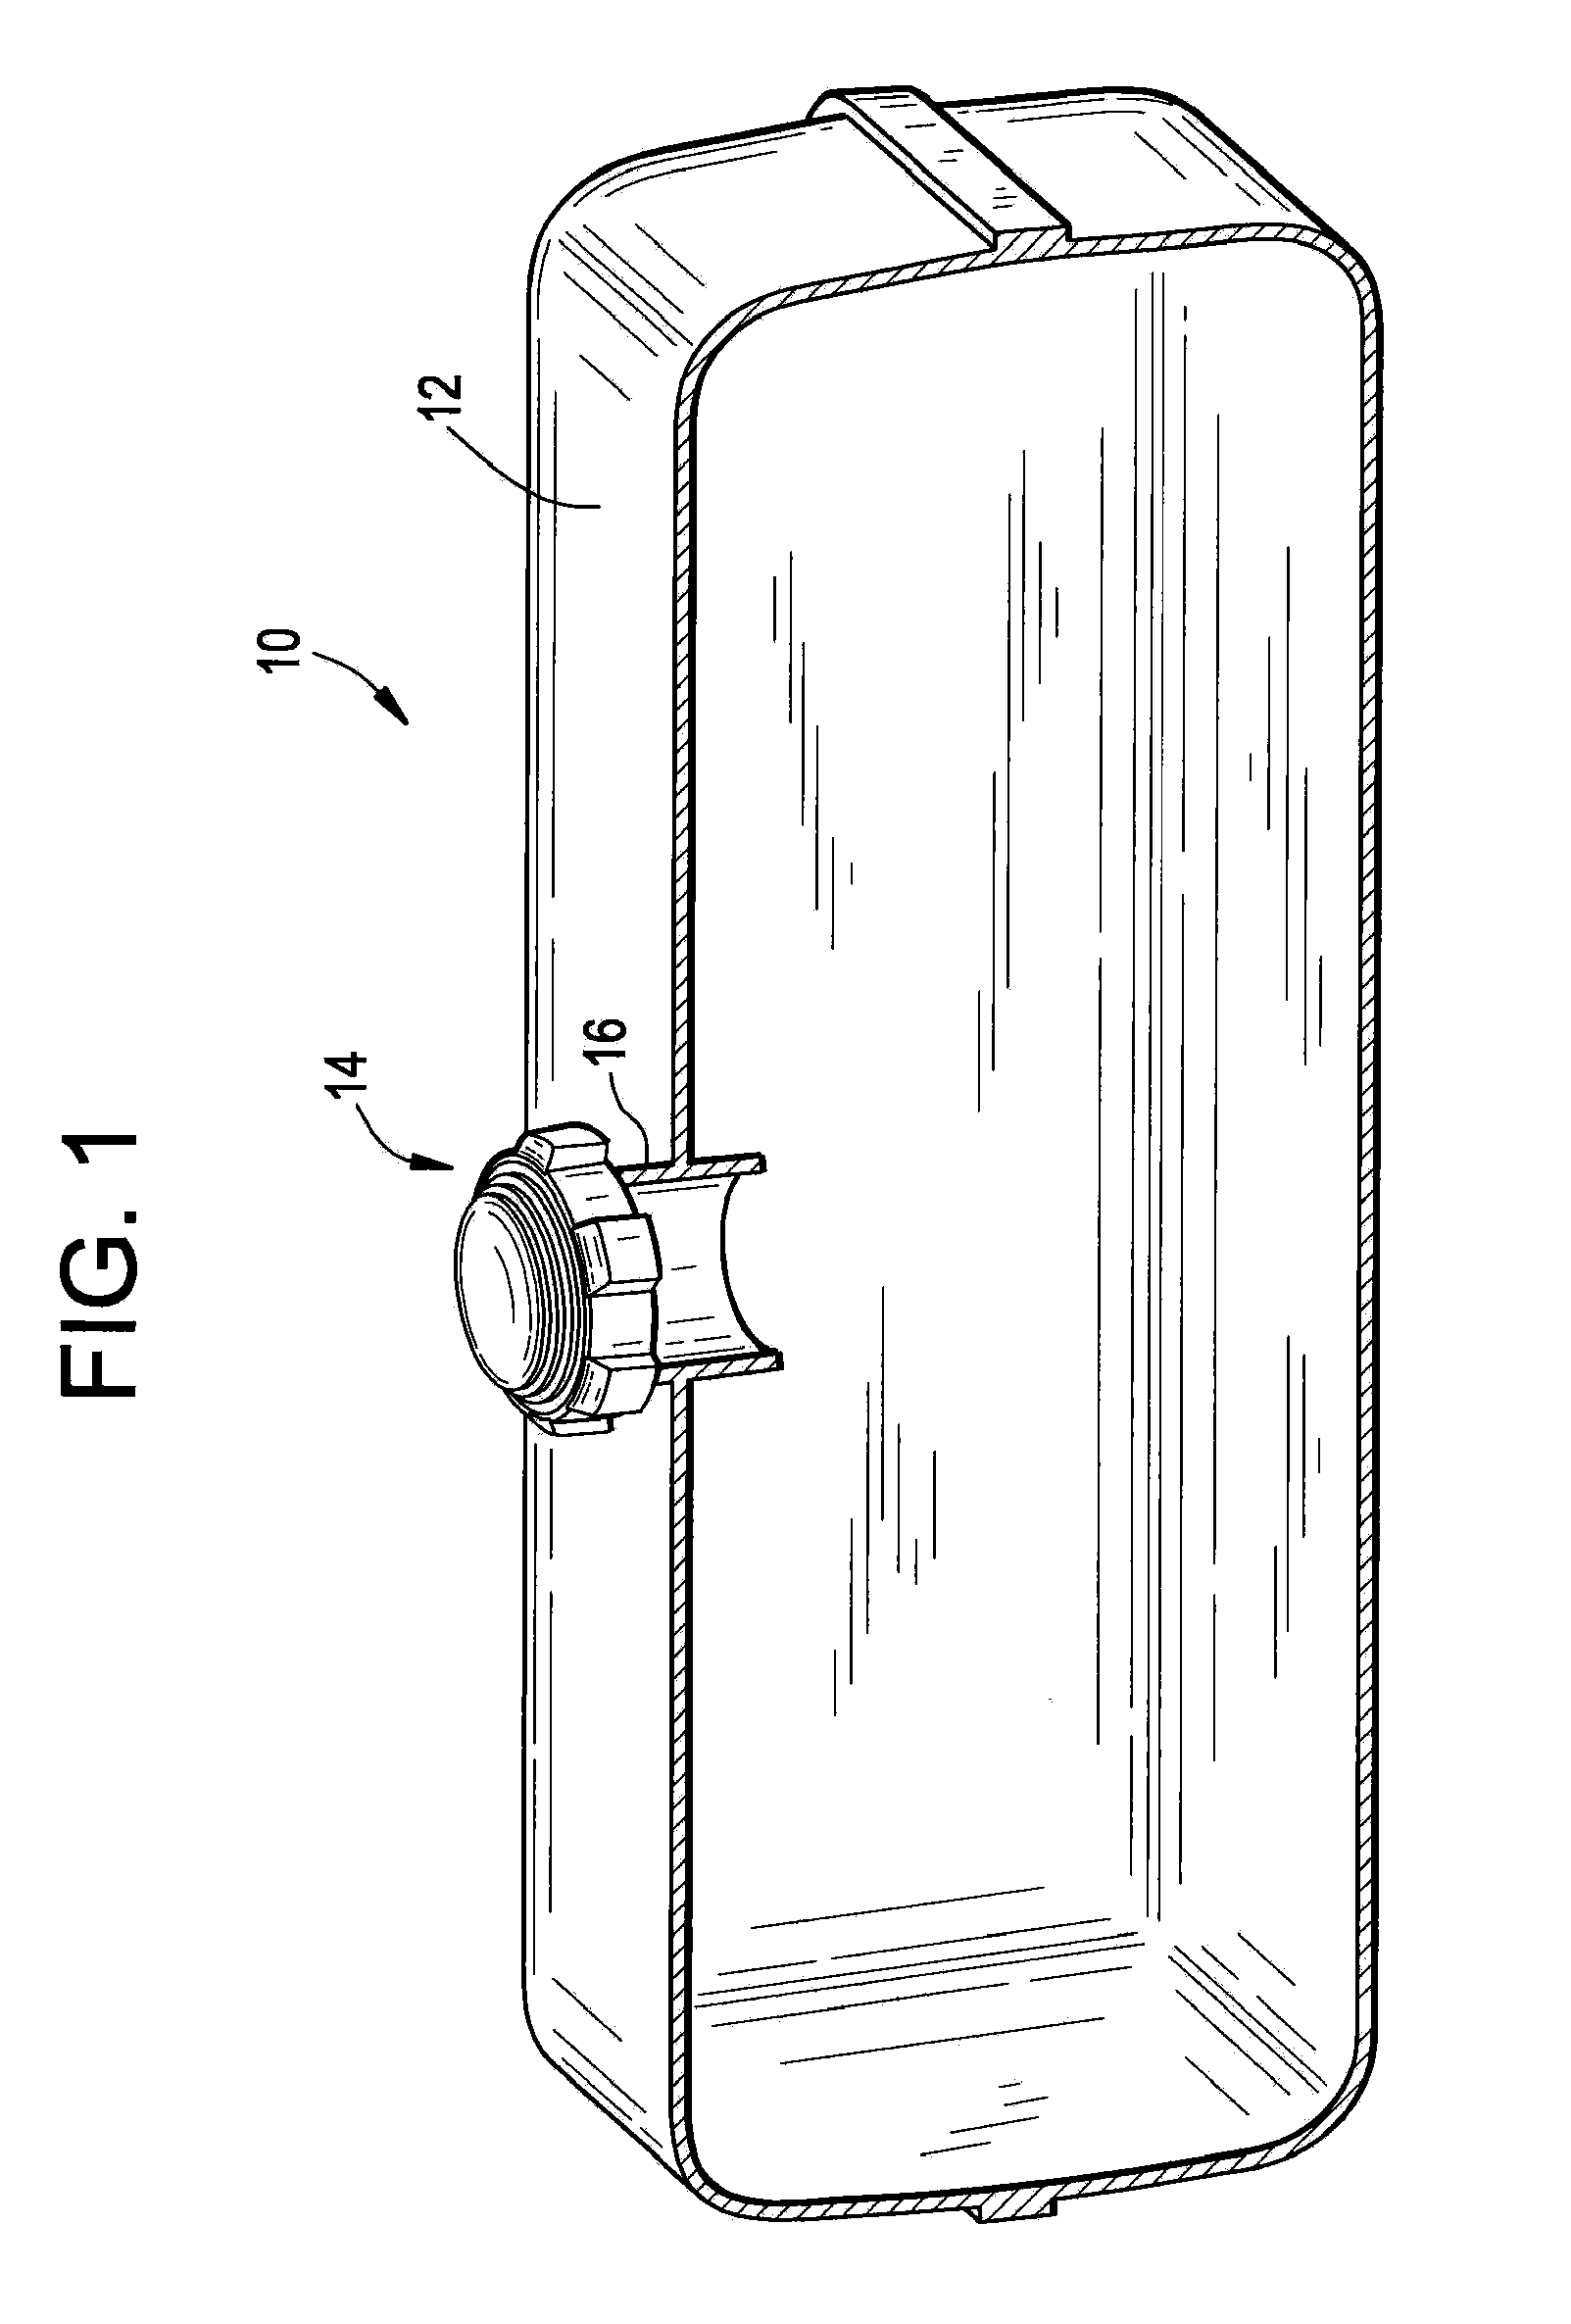 Fuel tank vent including a membrane separator